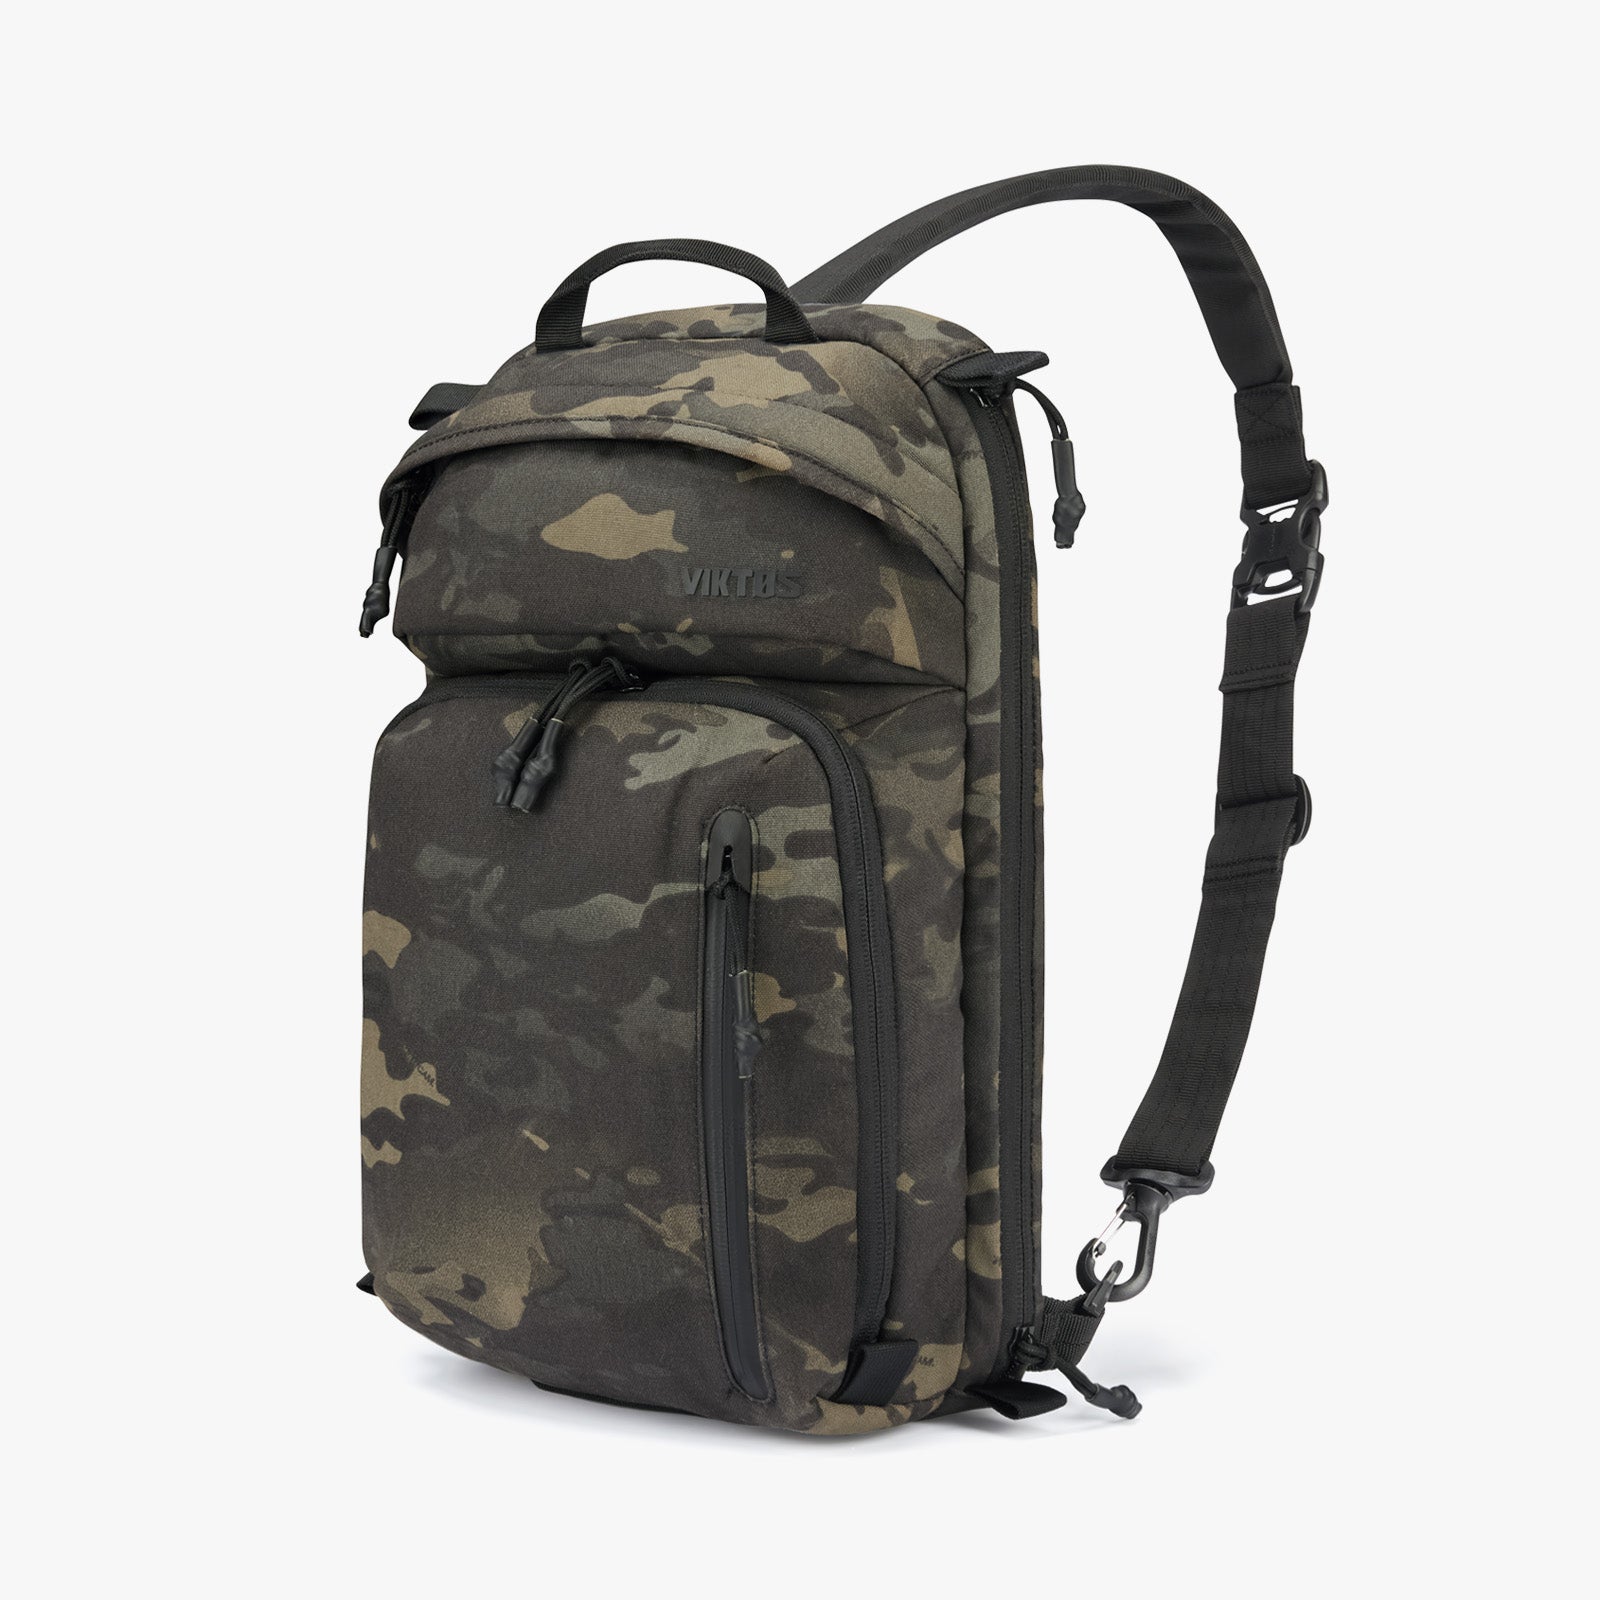 VIKTOS Upscale XL Slingbag Bags, Packs and Cases VIKTOS Multicam Black Tactical Gear Supplier Tactical Distributors Australia